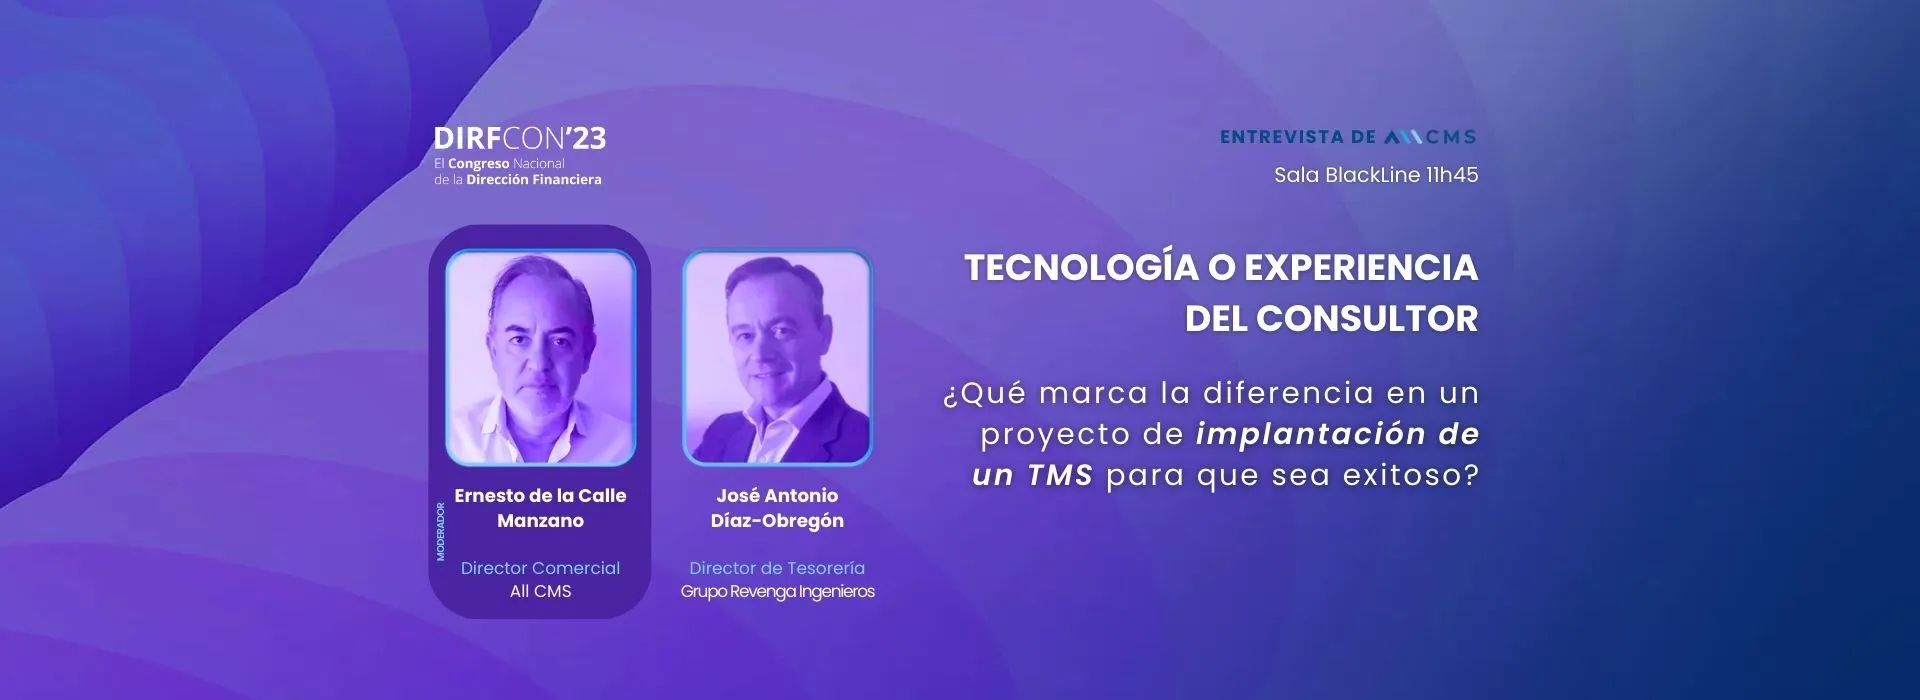 DIRFCON Congreso Financiero Espana ASSET All CMS Evento Gestion Tesoreria Entrevista Exito Implantacion TMS